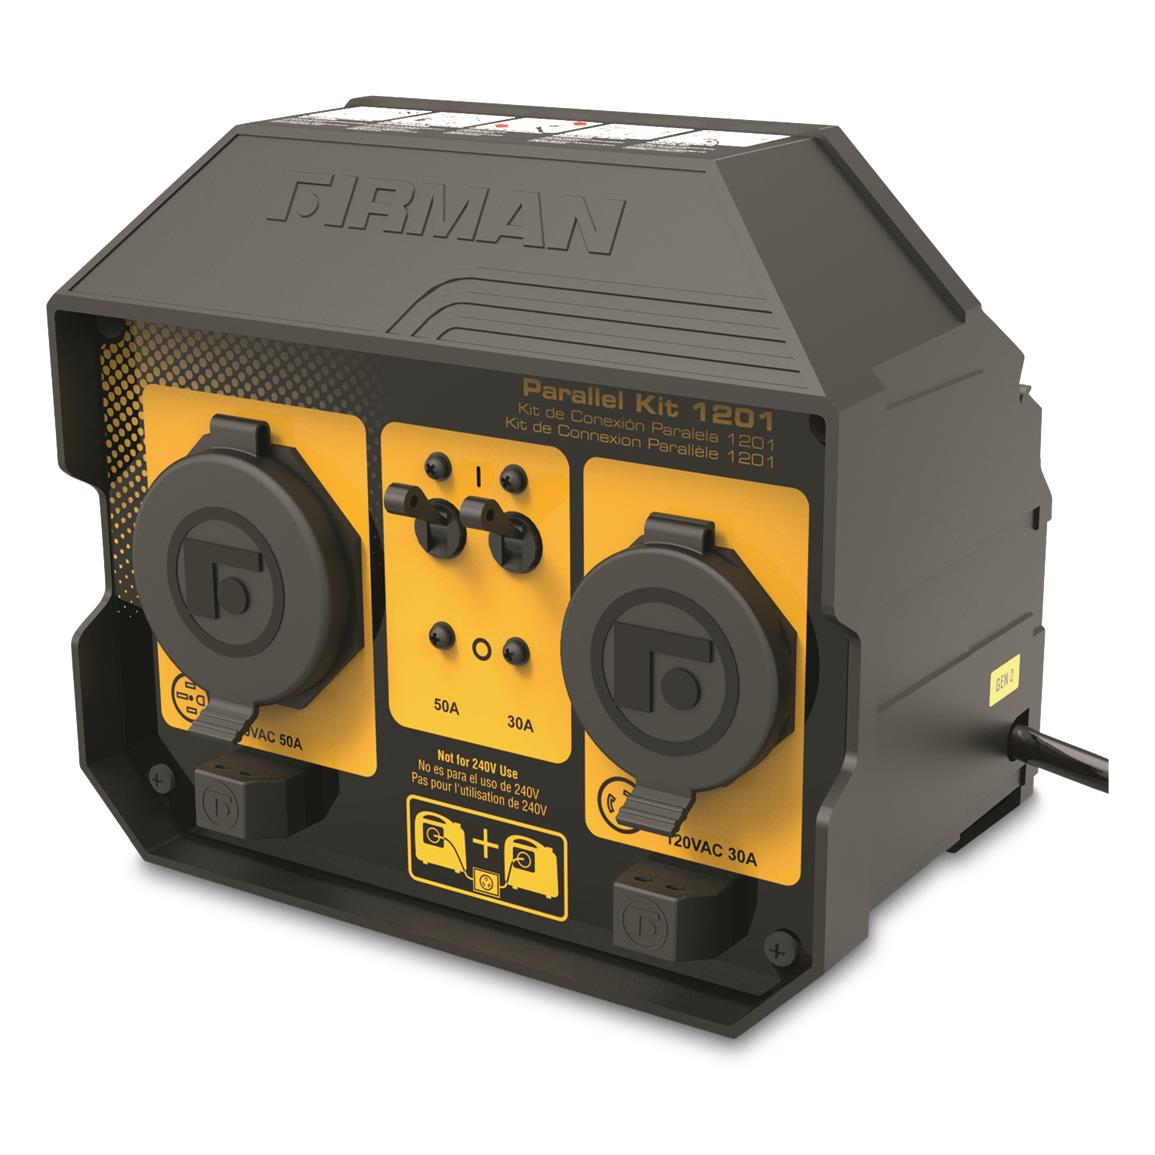 FIRMAN 50 Amp Portable Generator Parallel Kit 720895, Generators